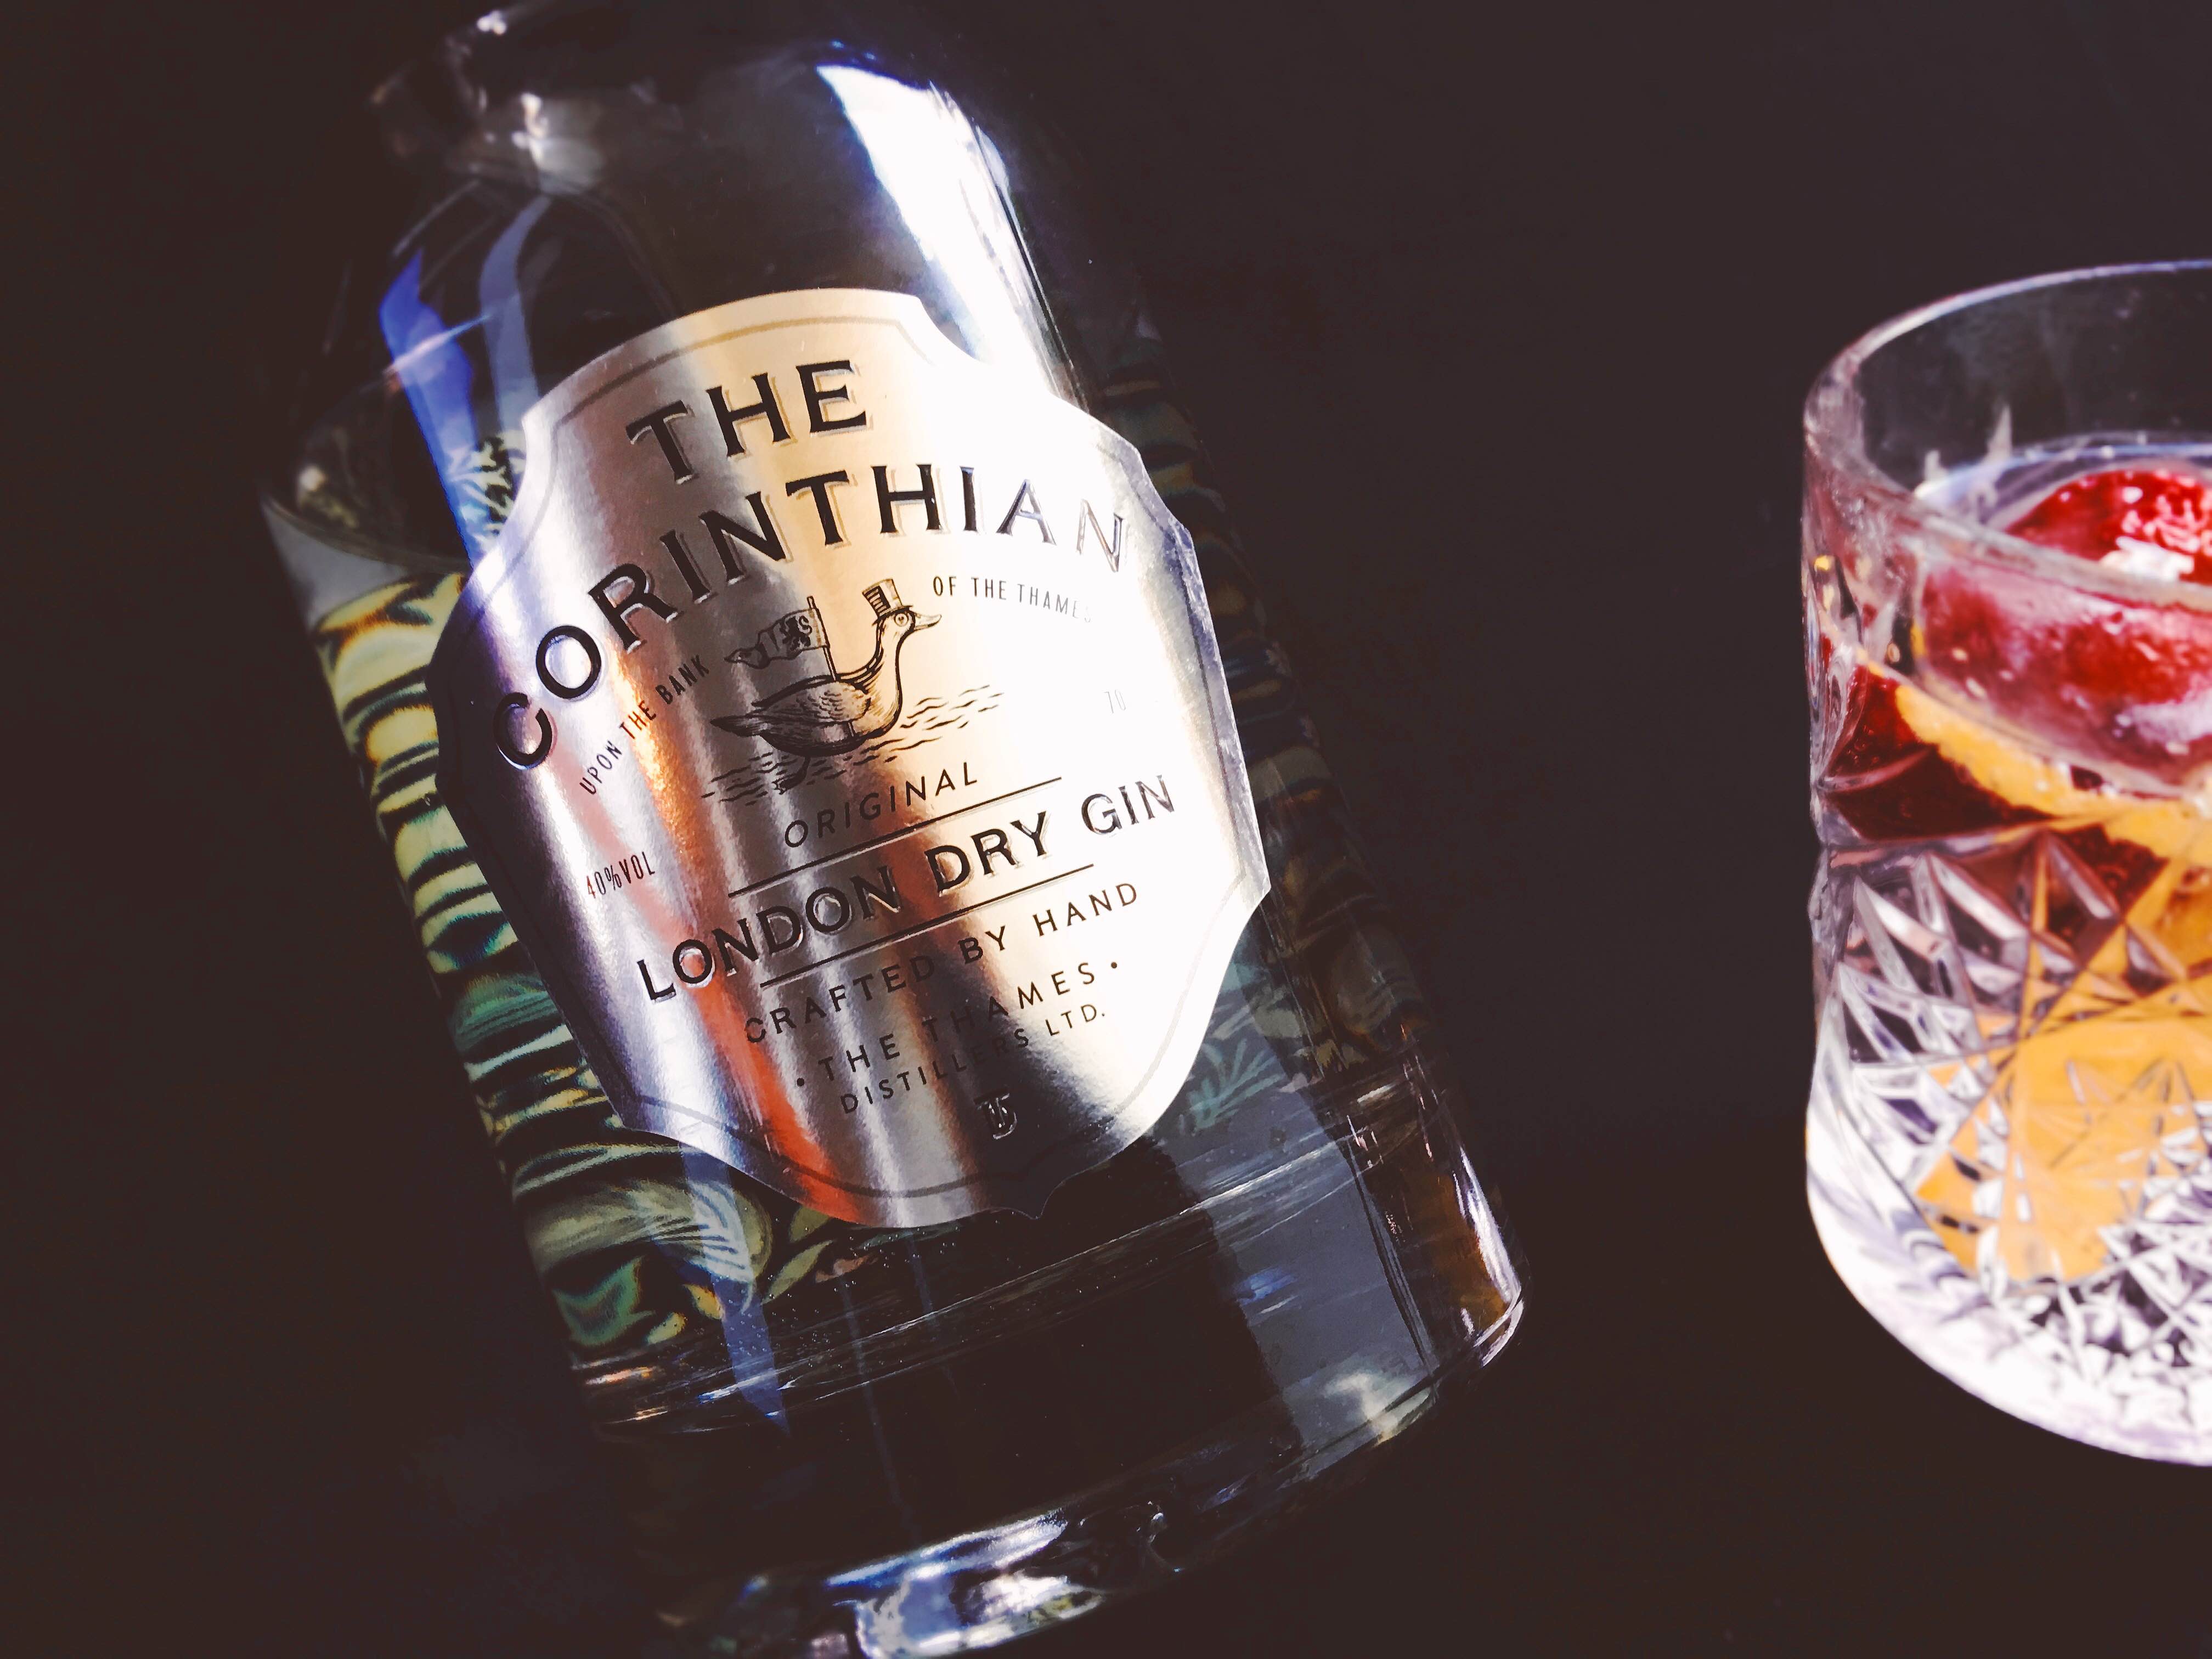 The Corinthian London Dry Gin